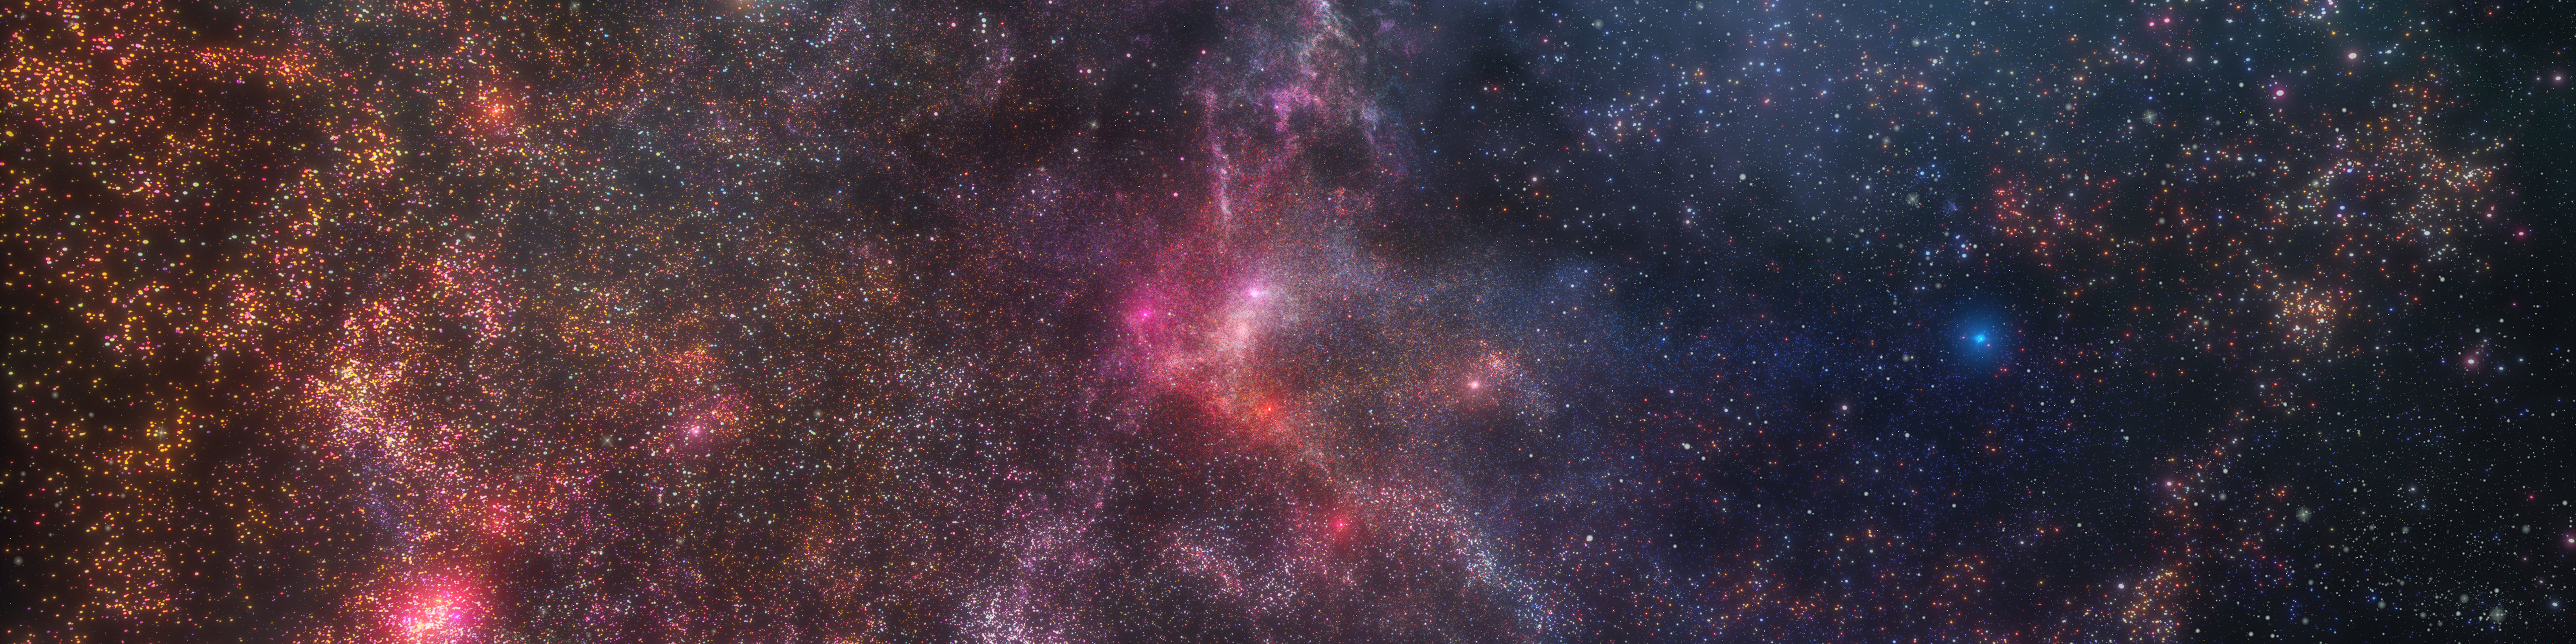 Abstract colorful nebula